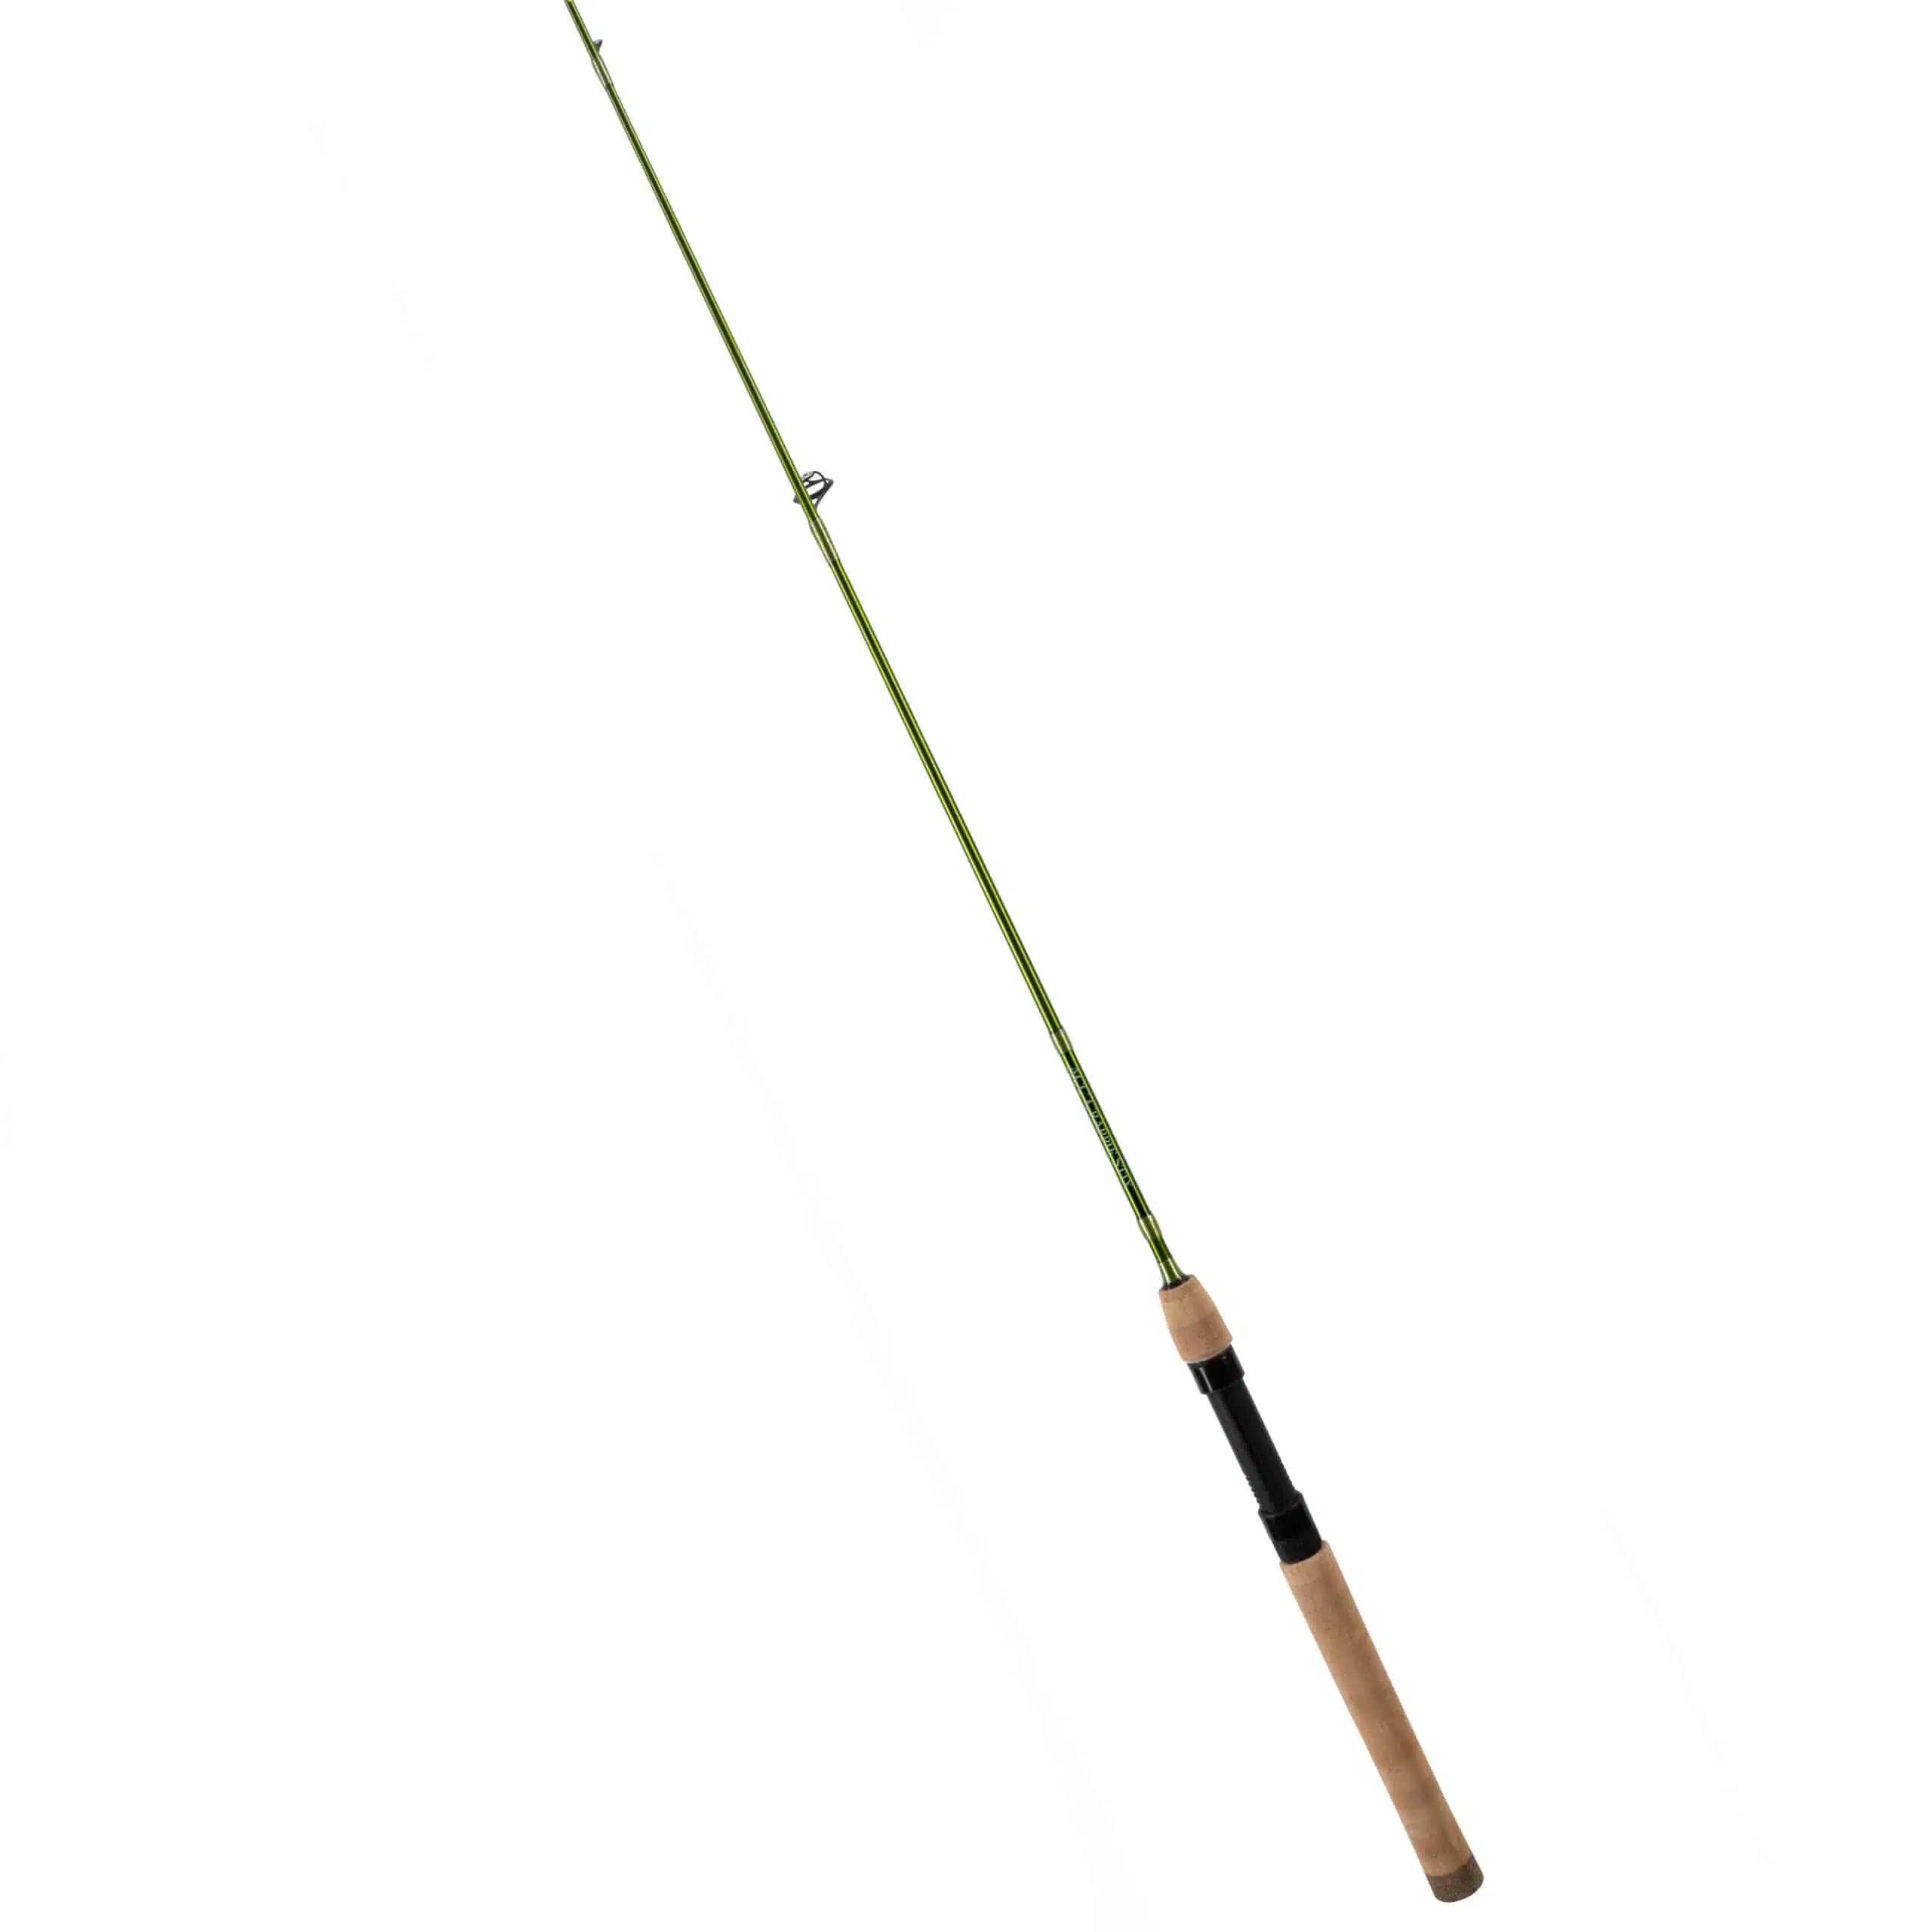 3 m 6 fishing rod short section stream rod Latest Best Selling